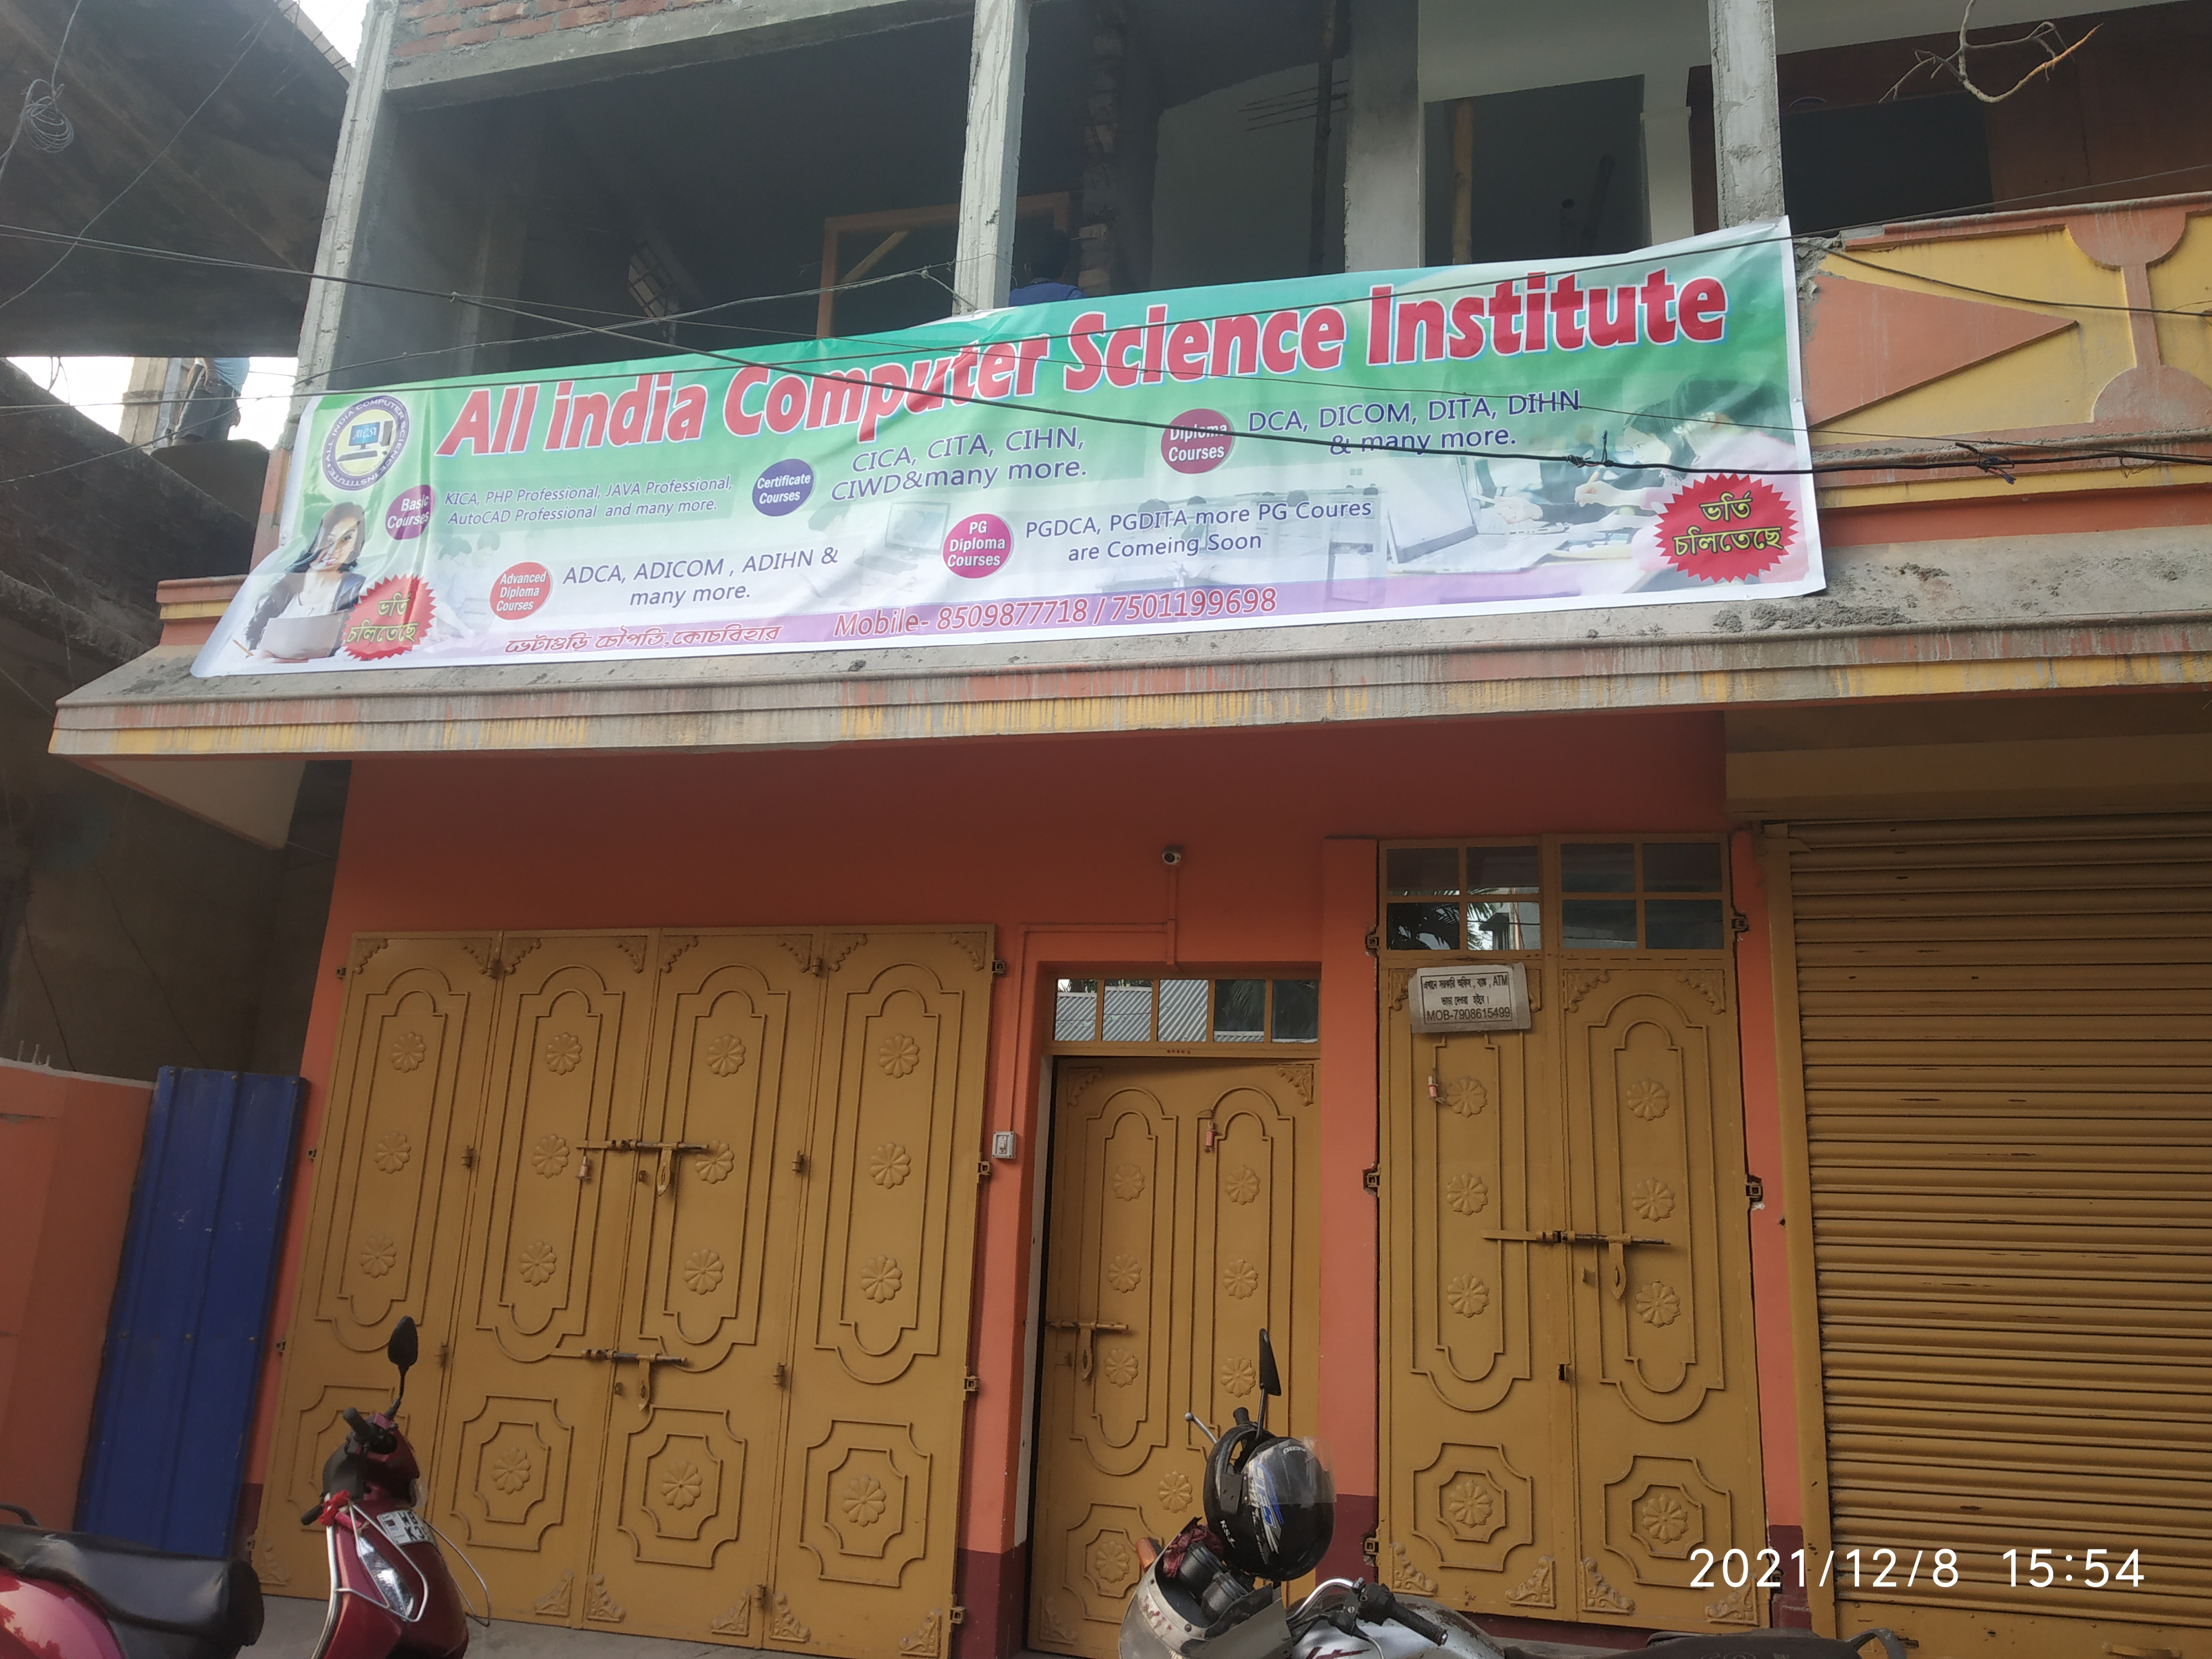 All India Computer Science Institute